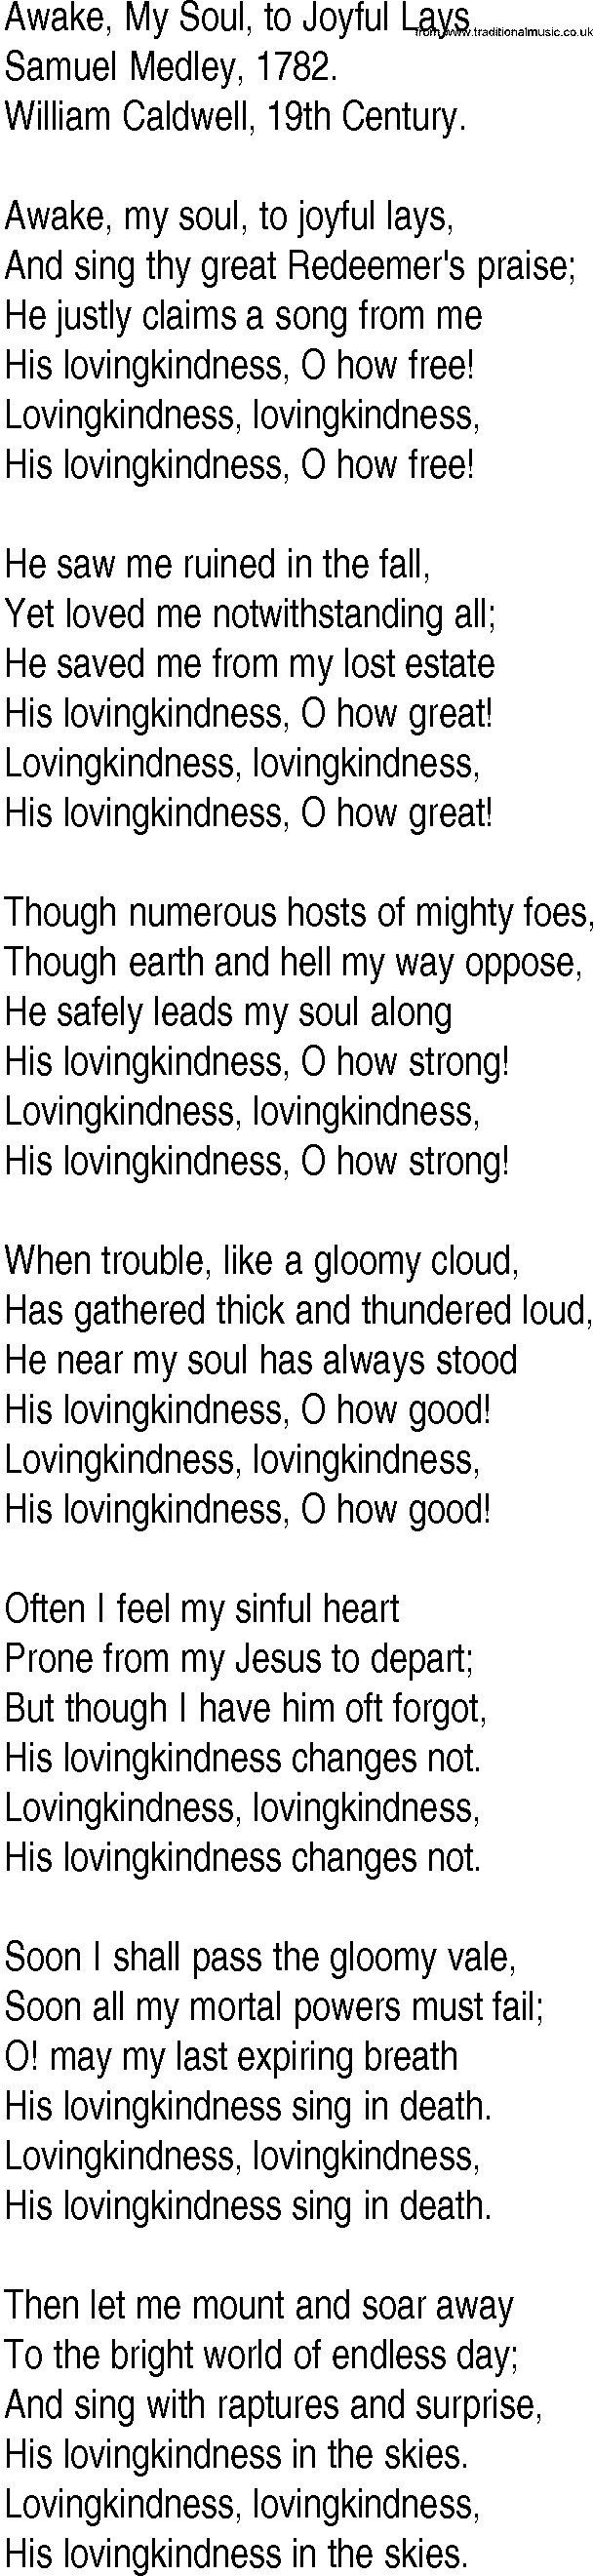 Hymn and Gospel Song: Awake, My Soul, to Joyful Lays by Samuel Medley lyrics